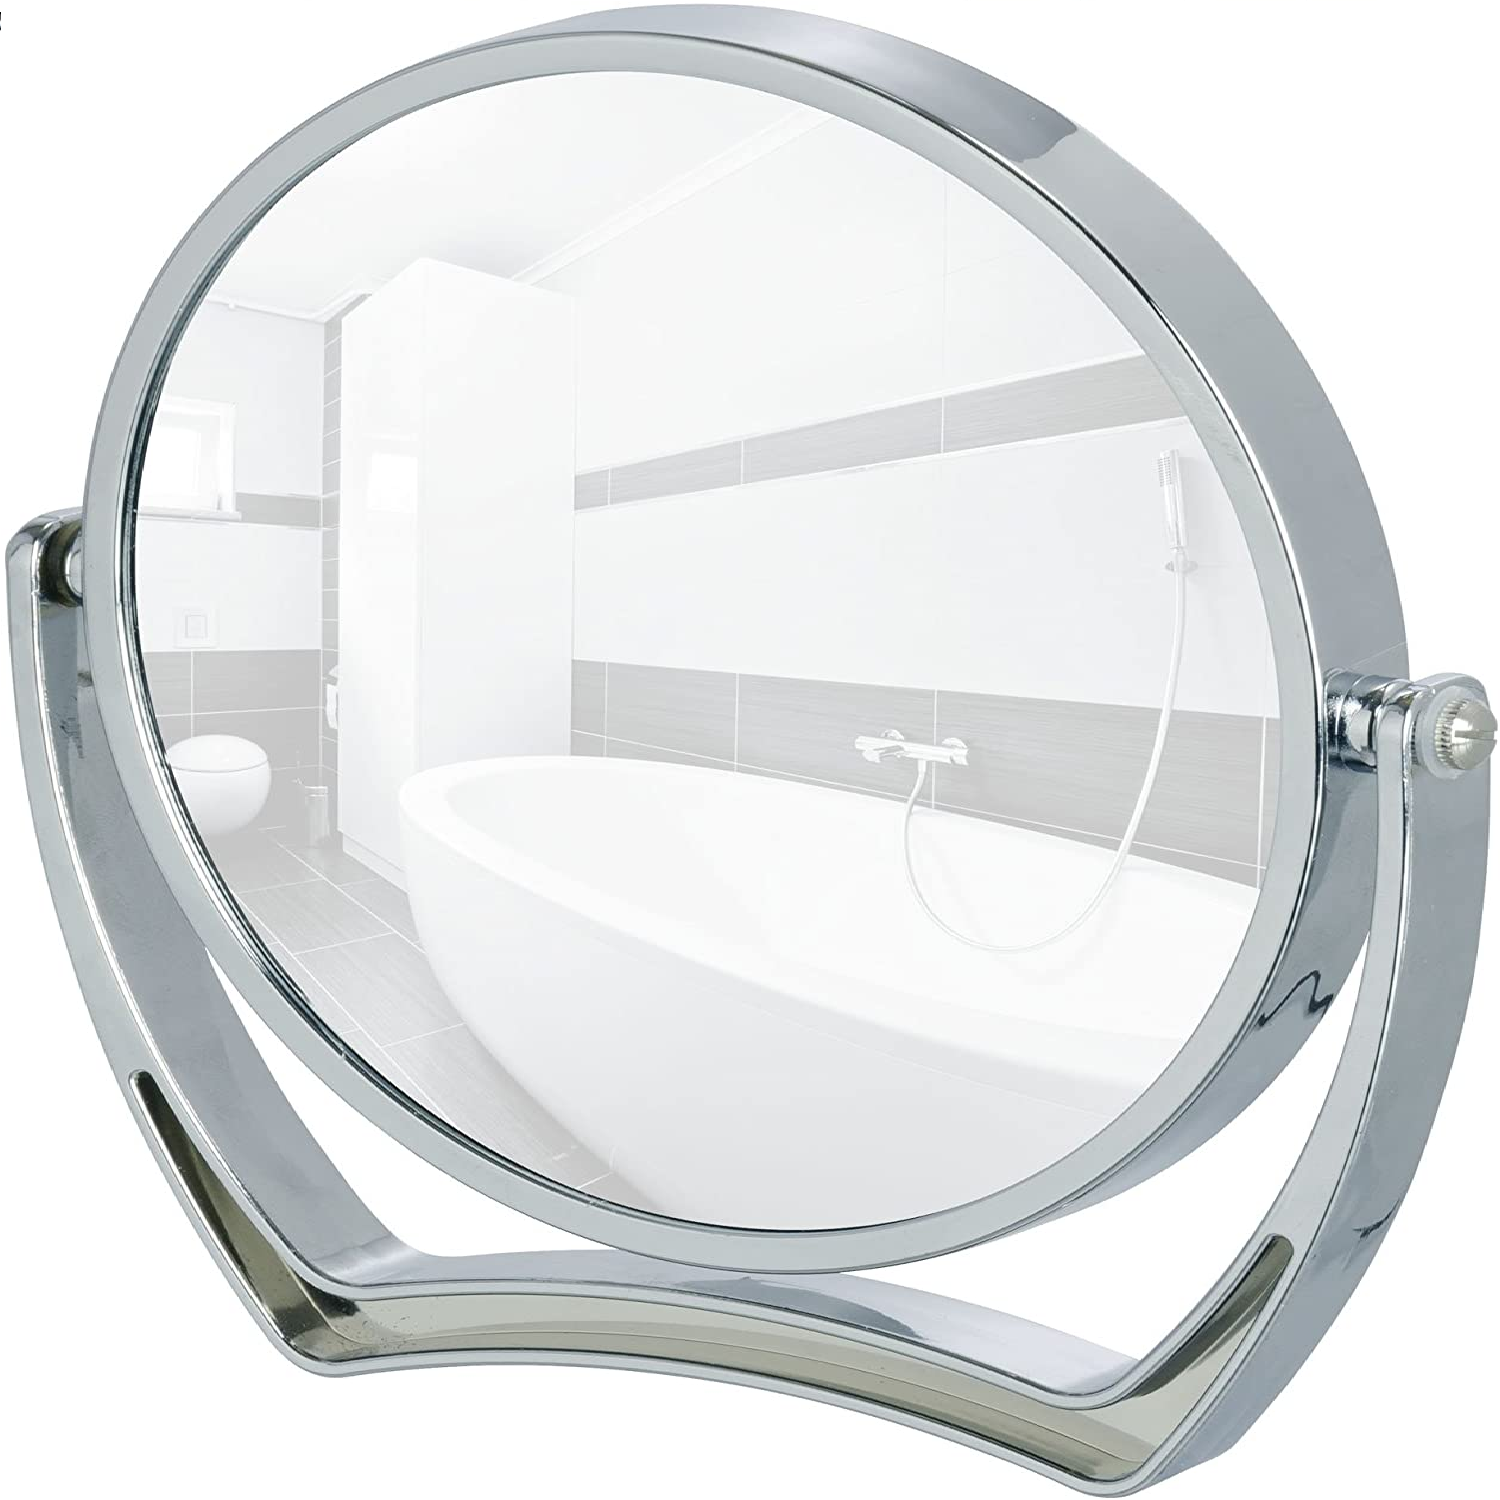 Kosmetikspiegel Noale Chrom - neigbar, Spiegelfläche ø 15 cm 500 % Vergrößerung, Kunststoff, 19.5 x 19 x 2 cm, Chrom